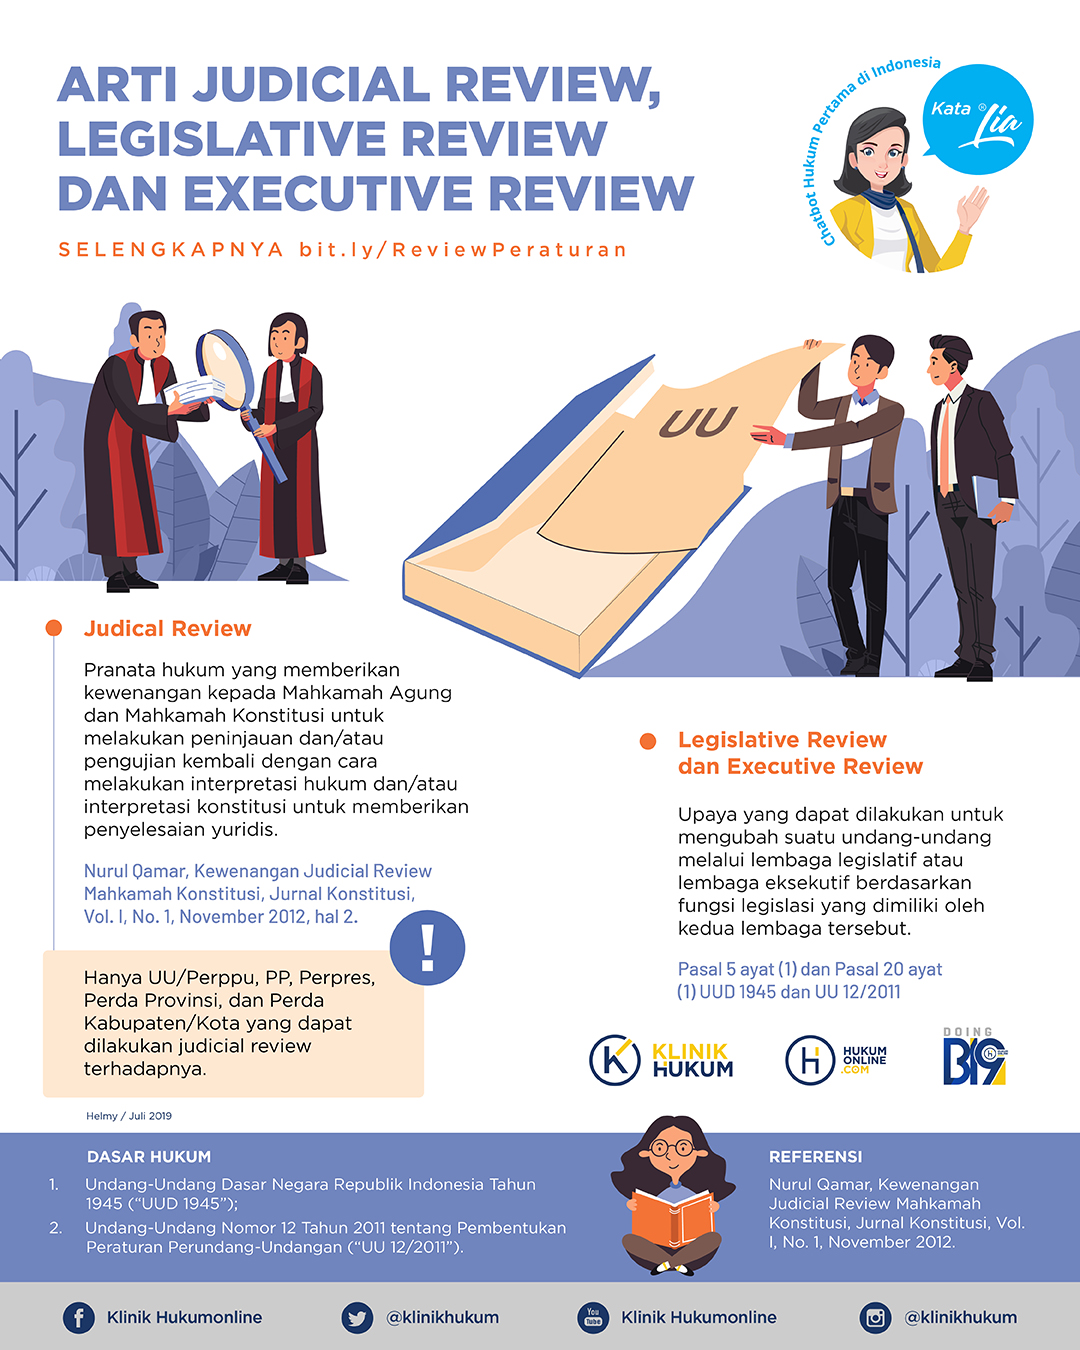 Arti Judicial Review, Legislative Review, dan Executive Review